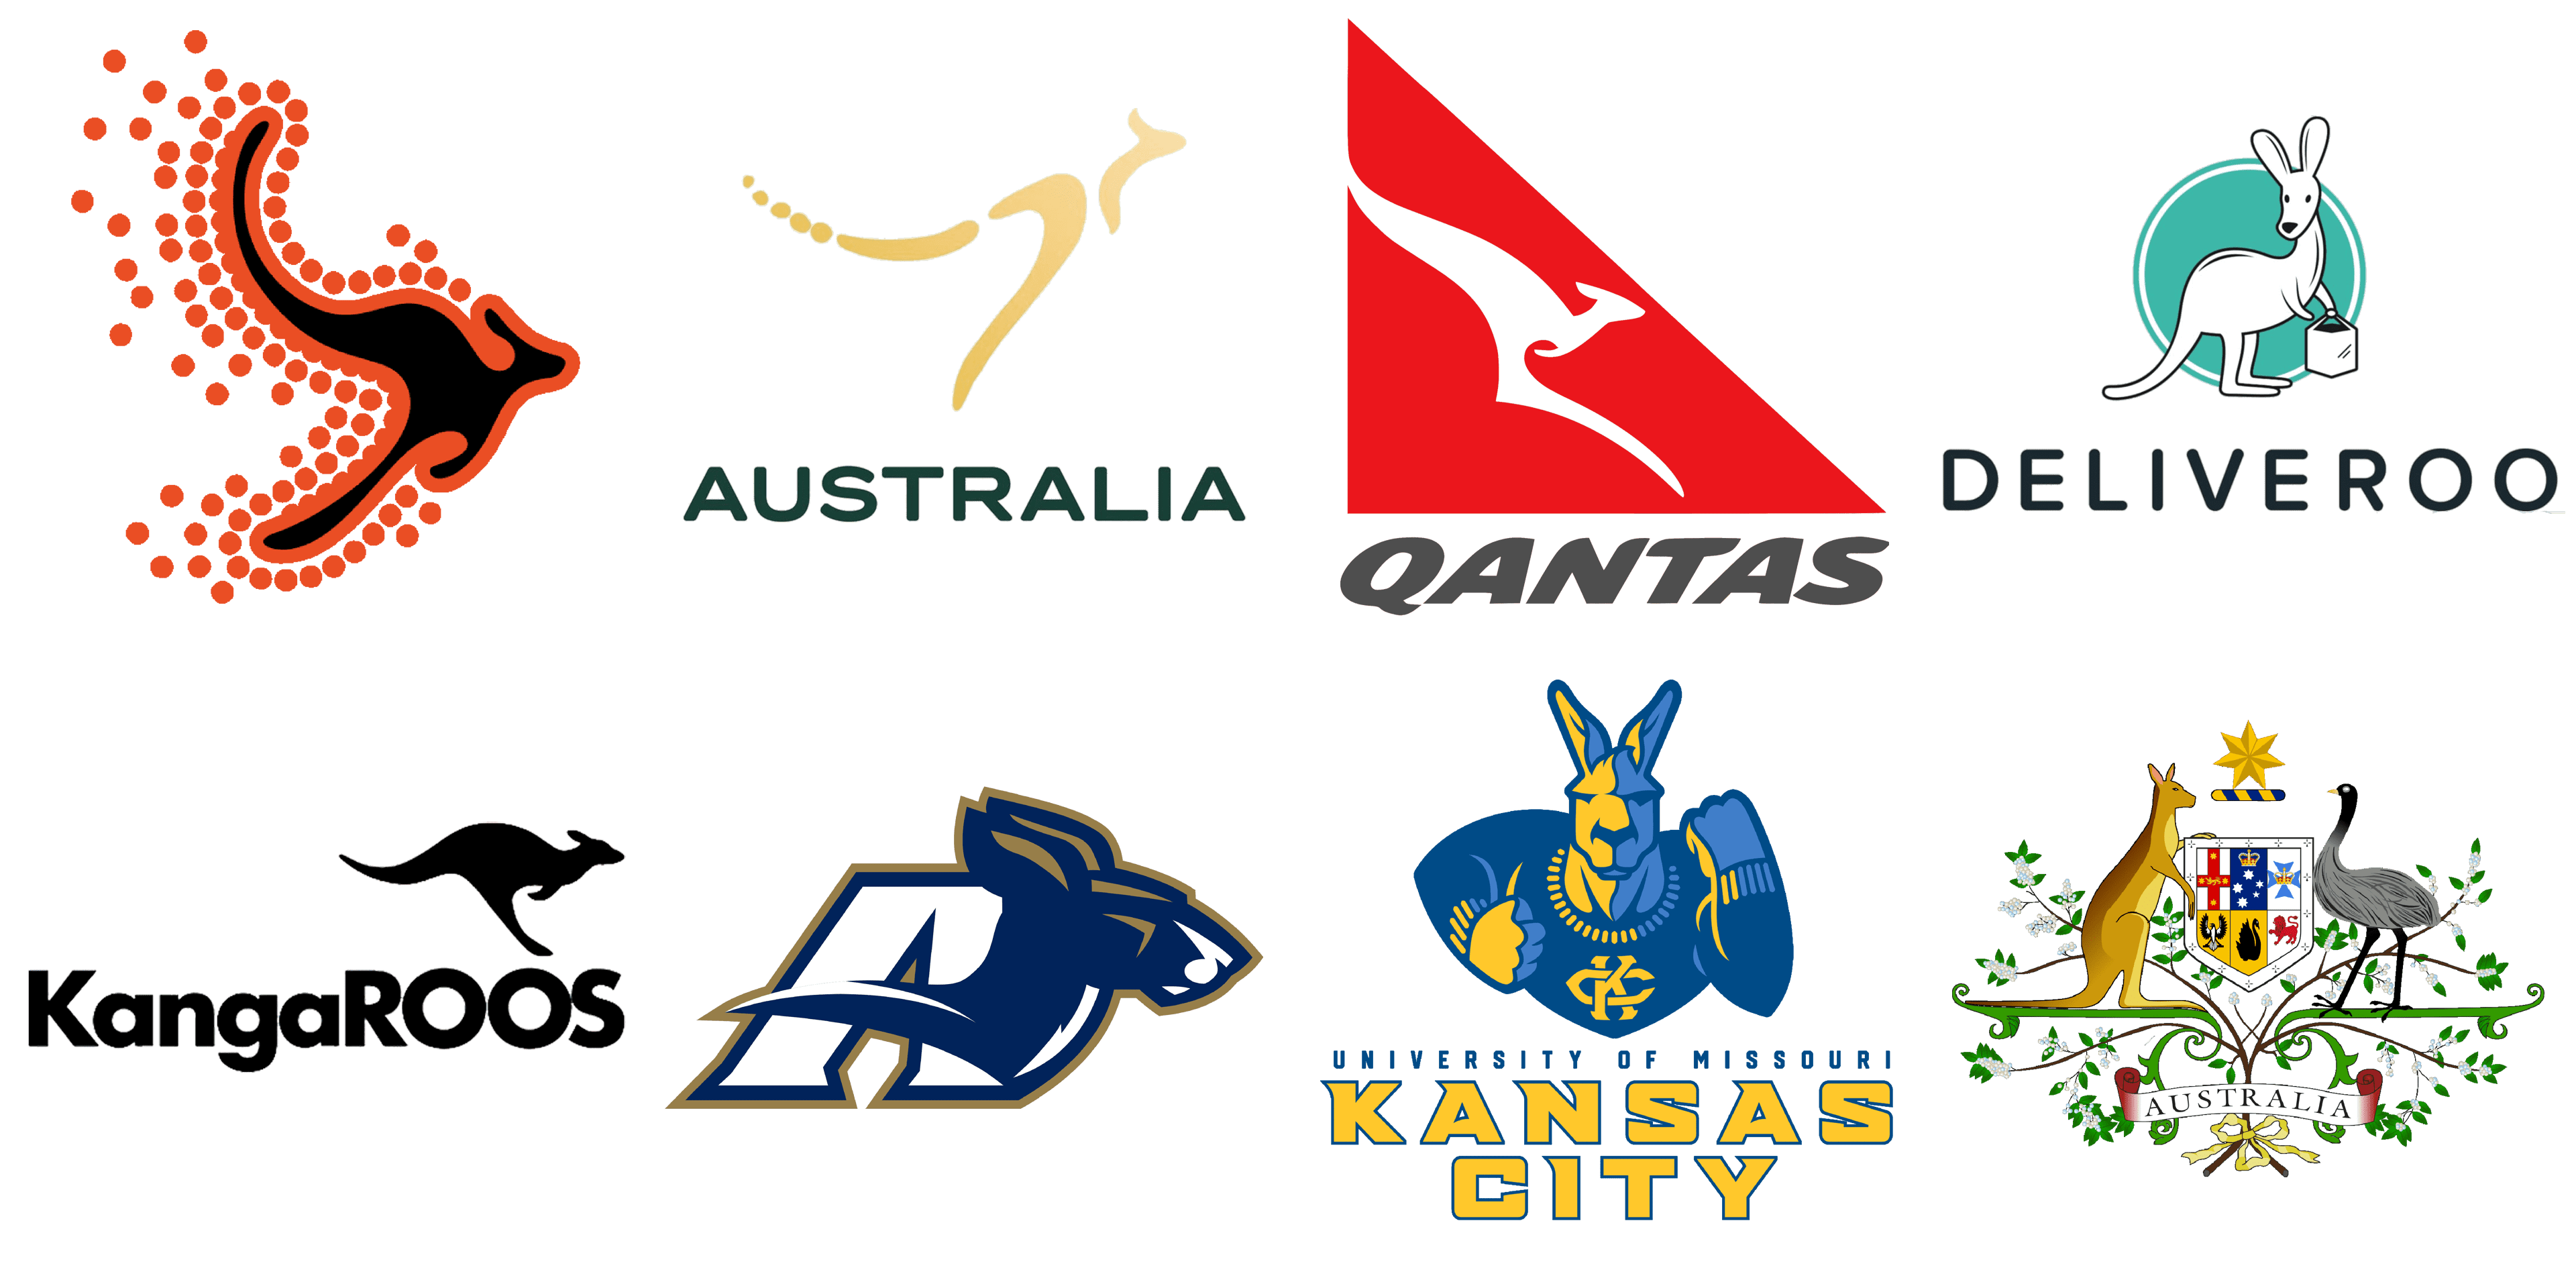 Logos With Kangaroo Famous a Most